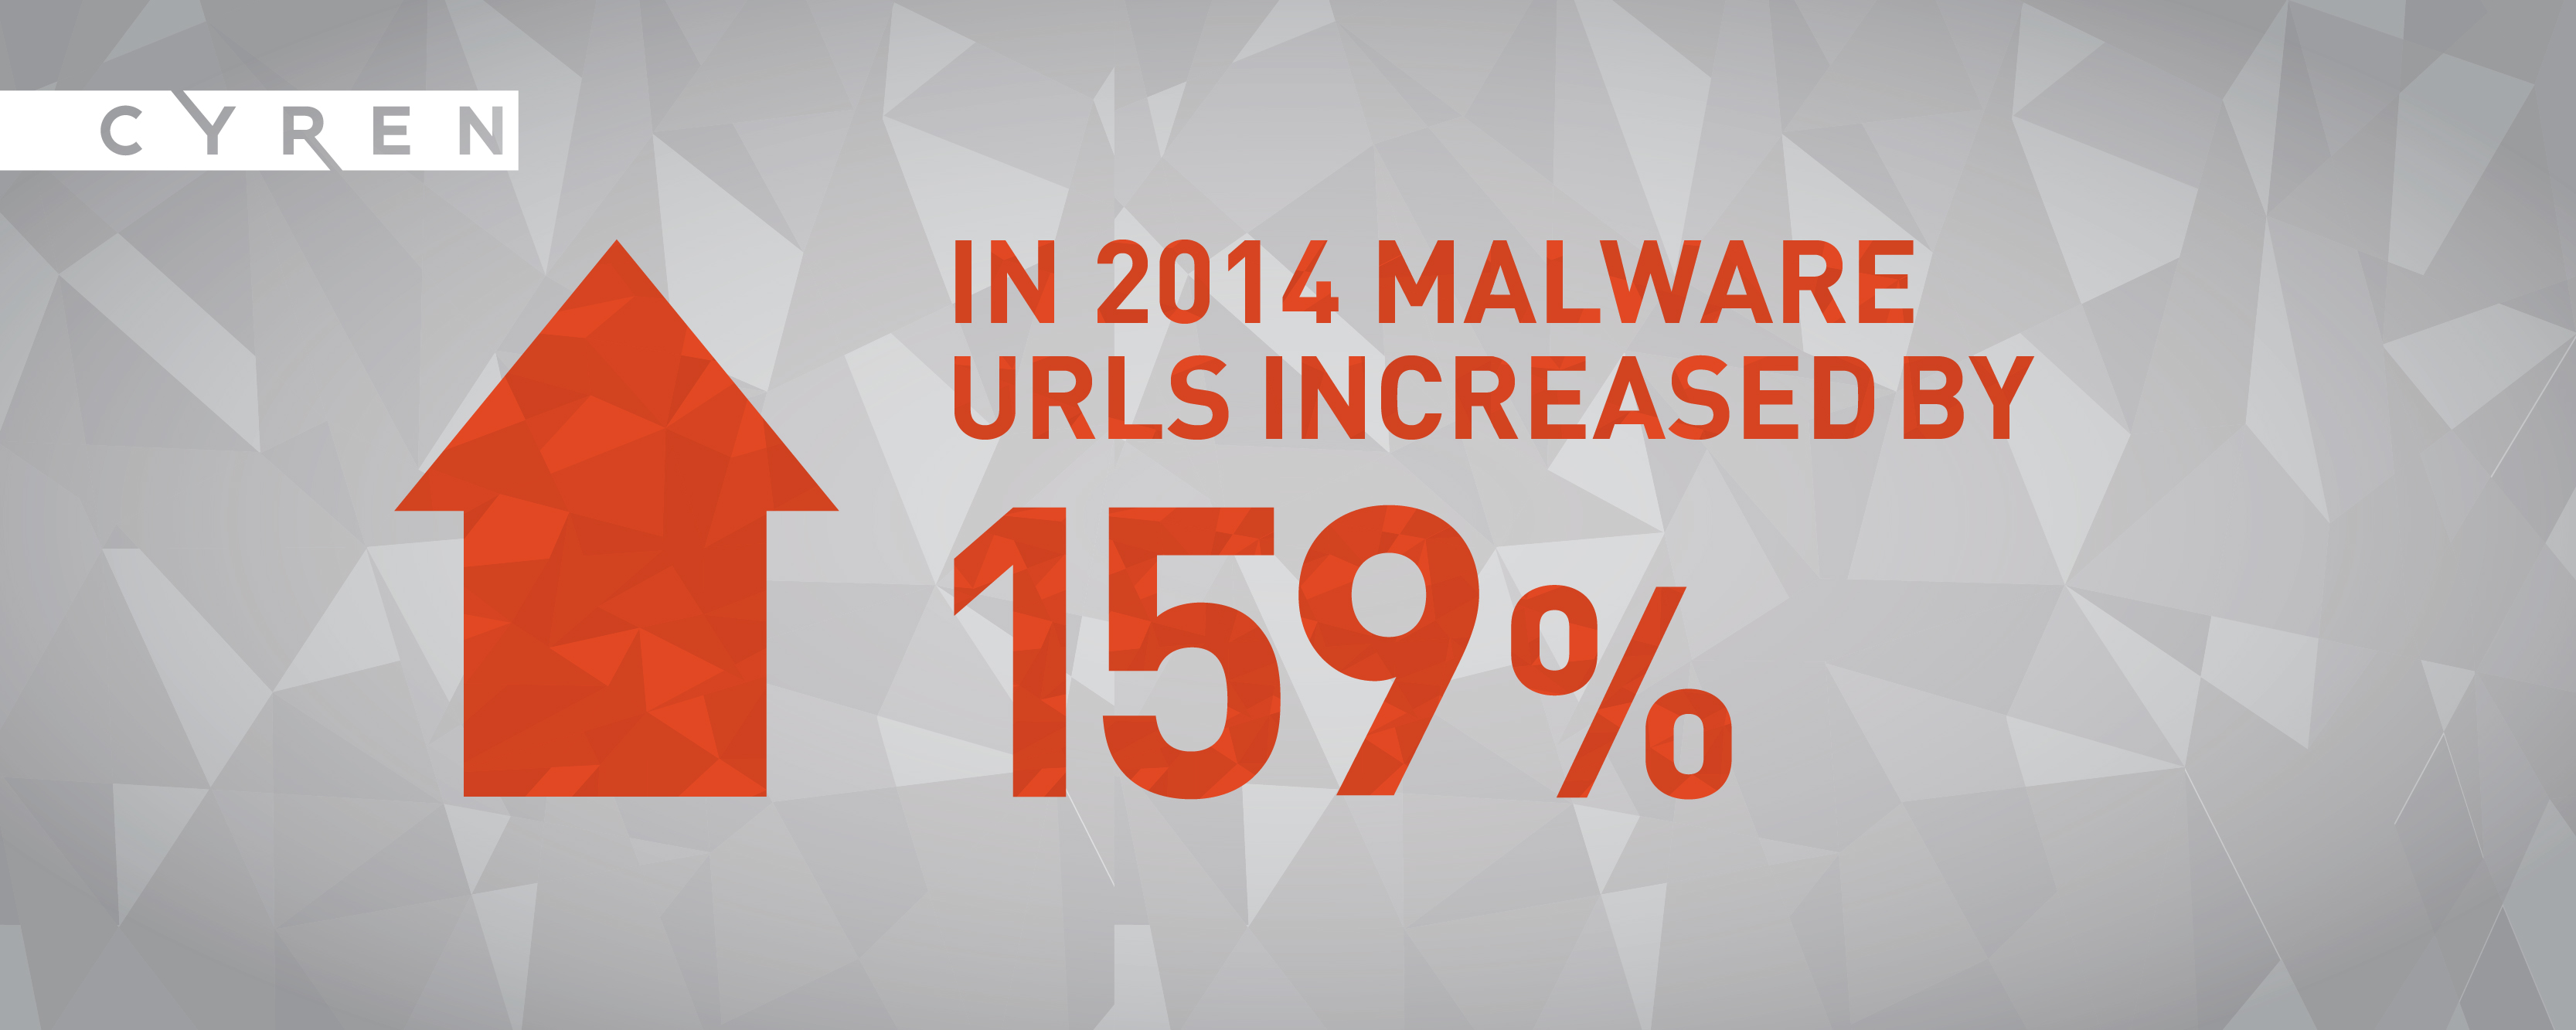 159% increase in malware URLs